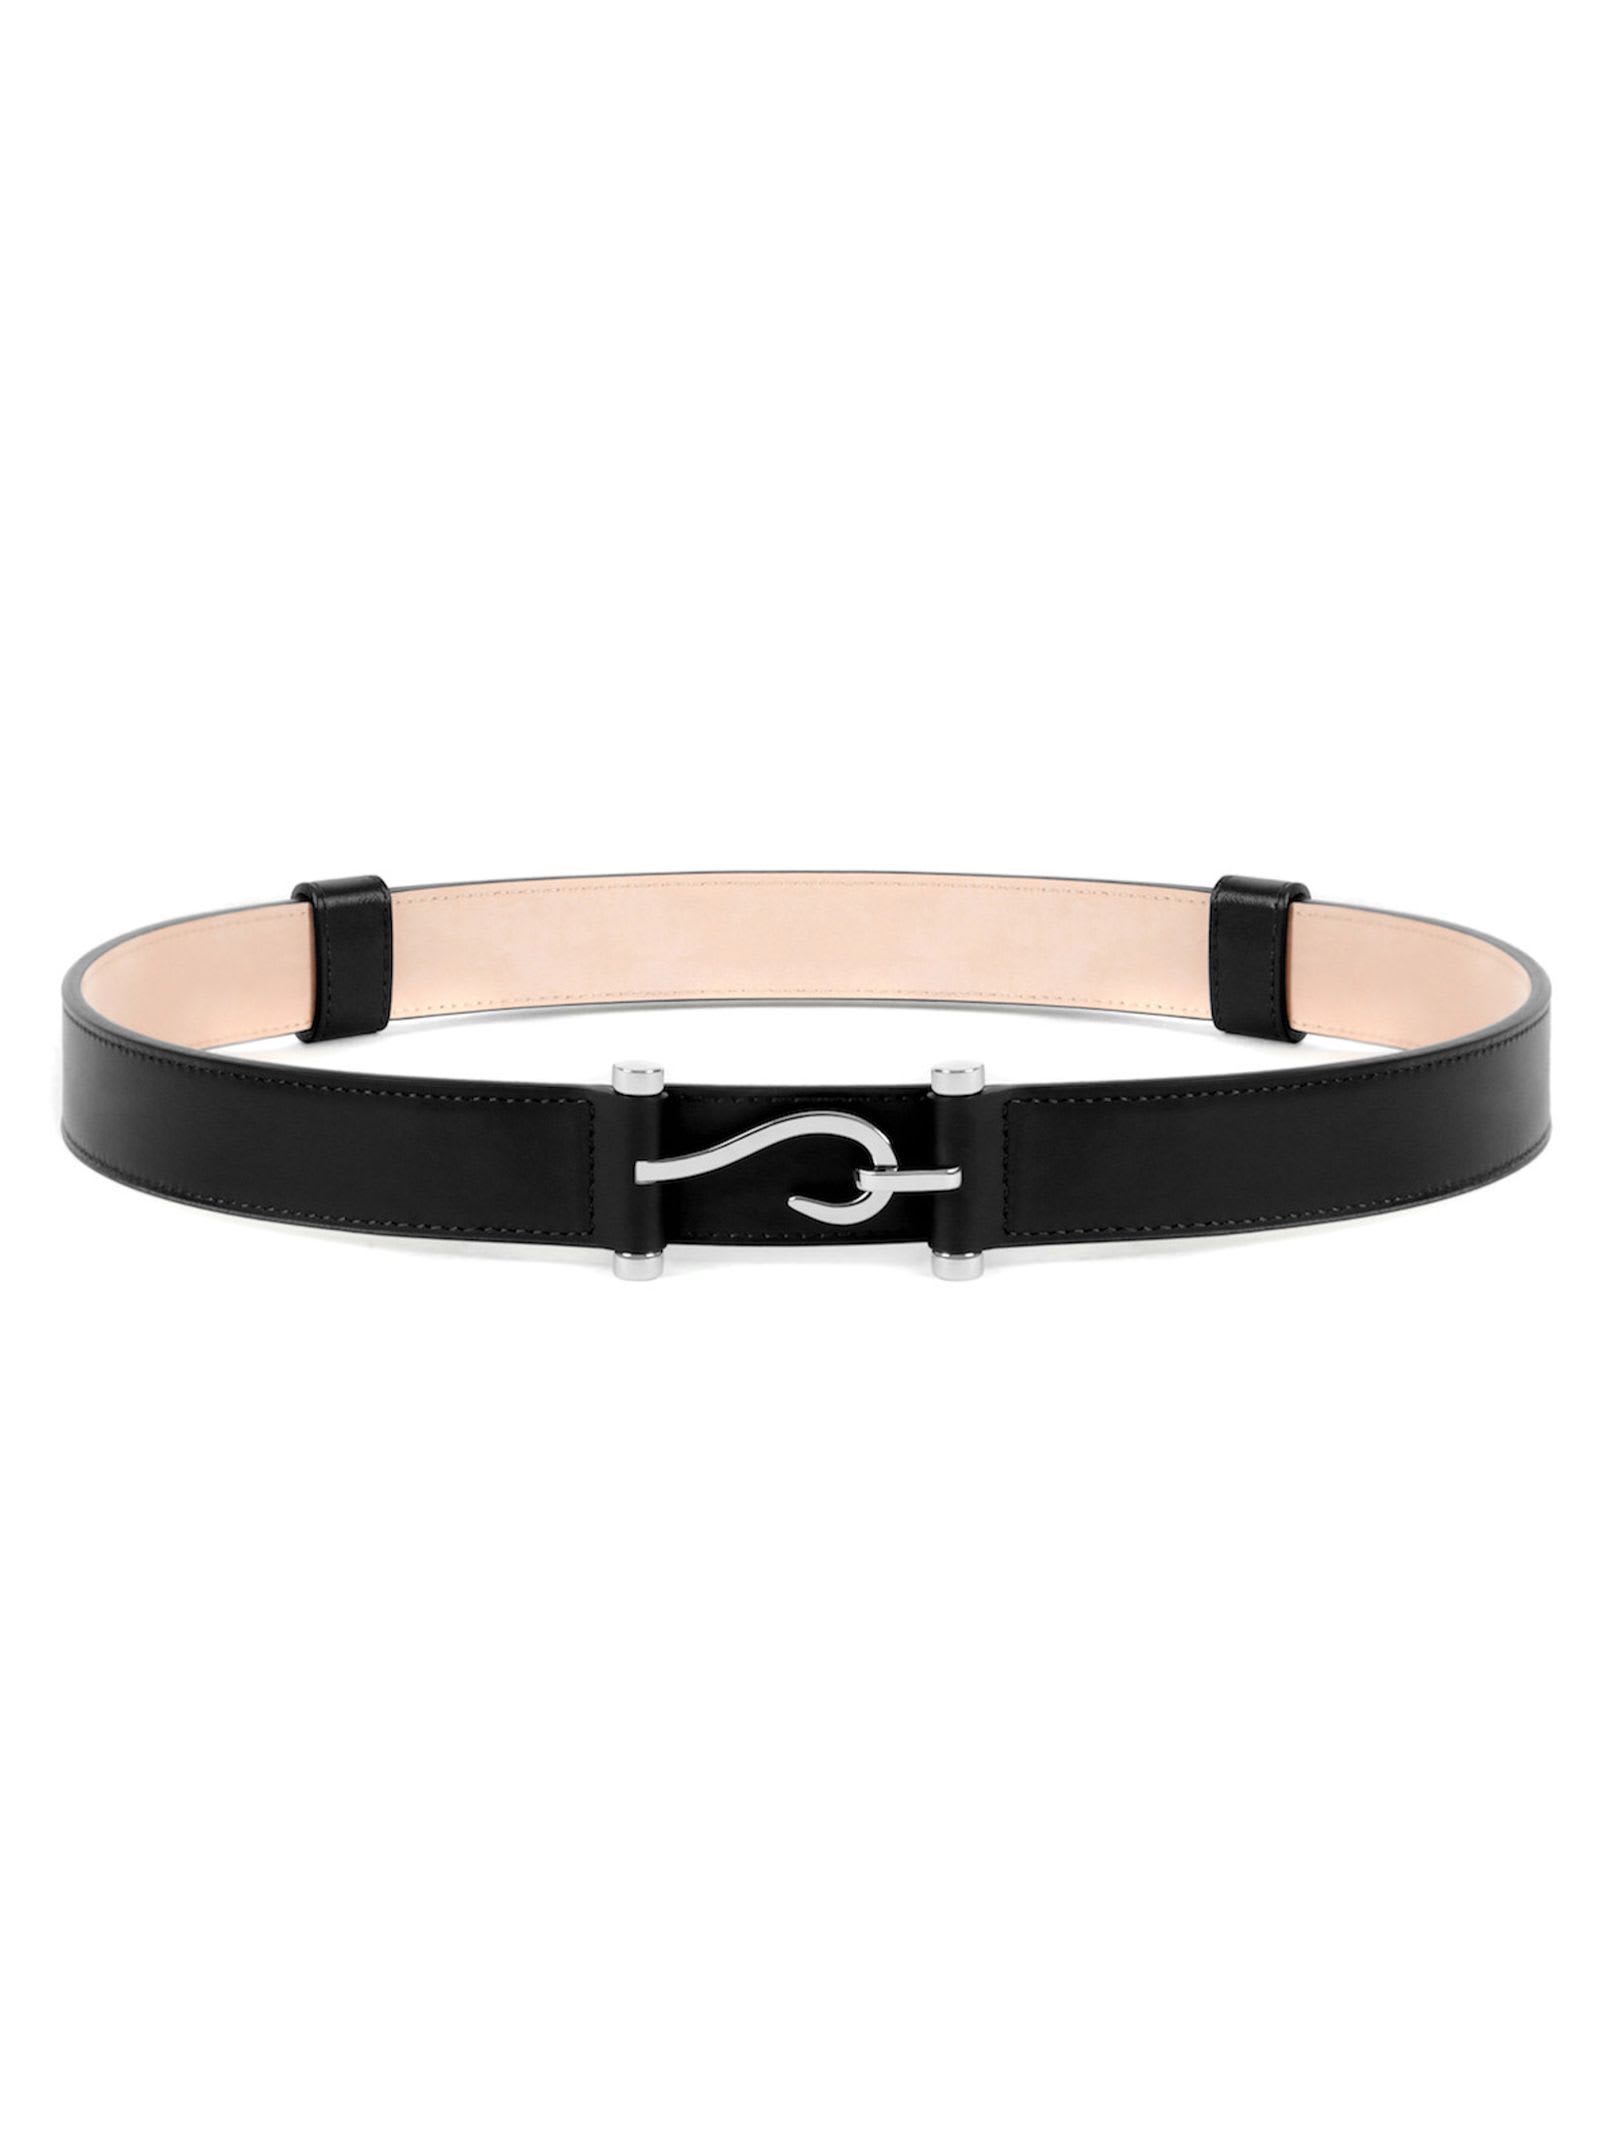 Shop Edhen Milano Black Leather Comporta Belt